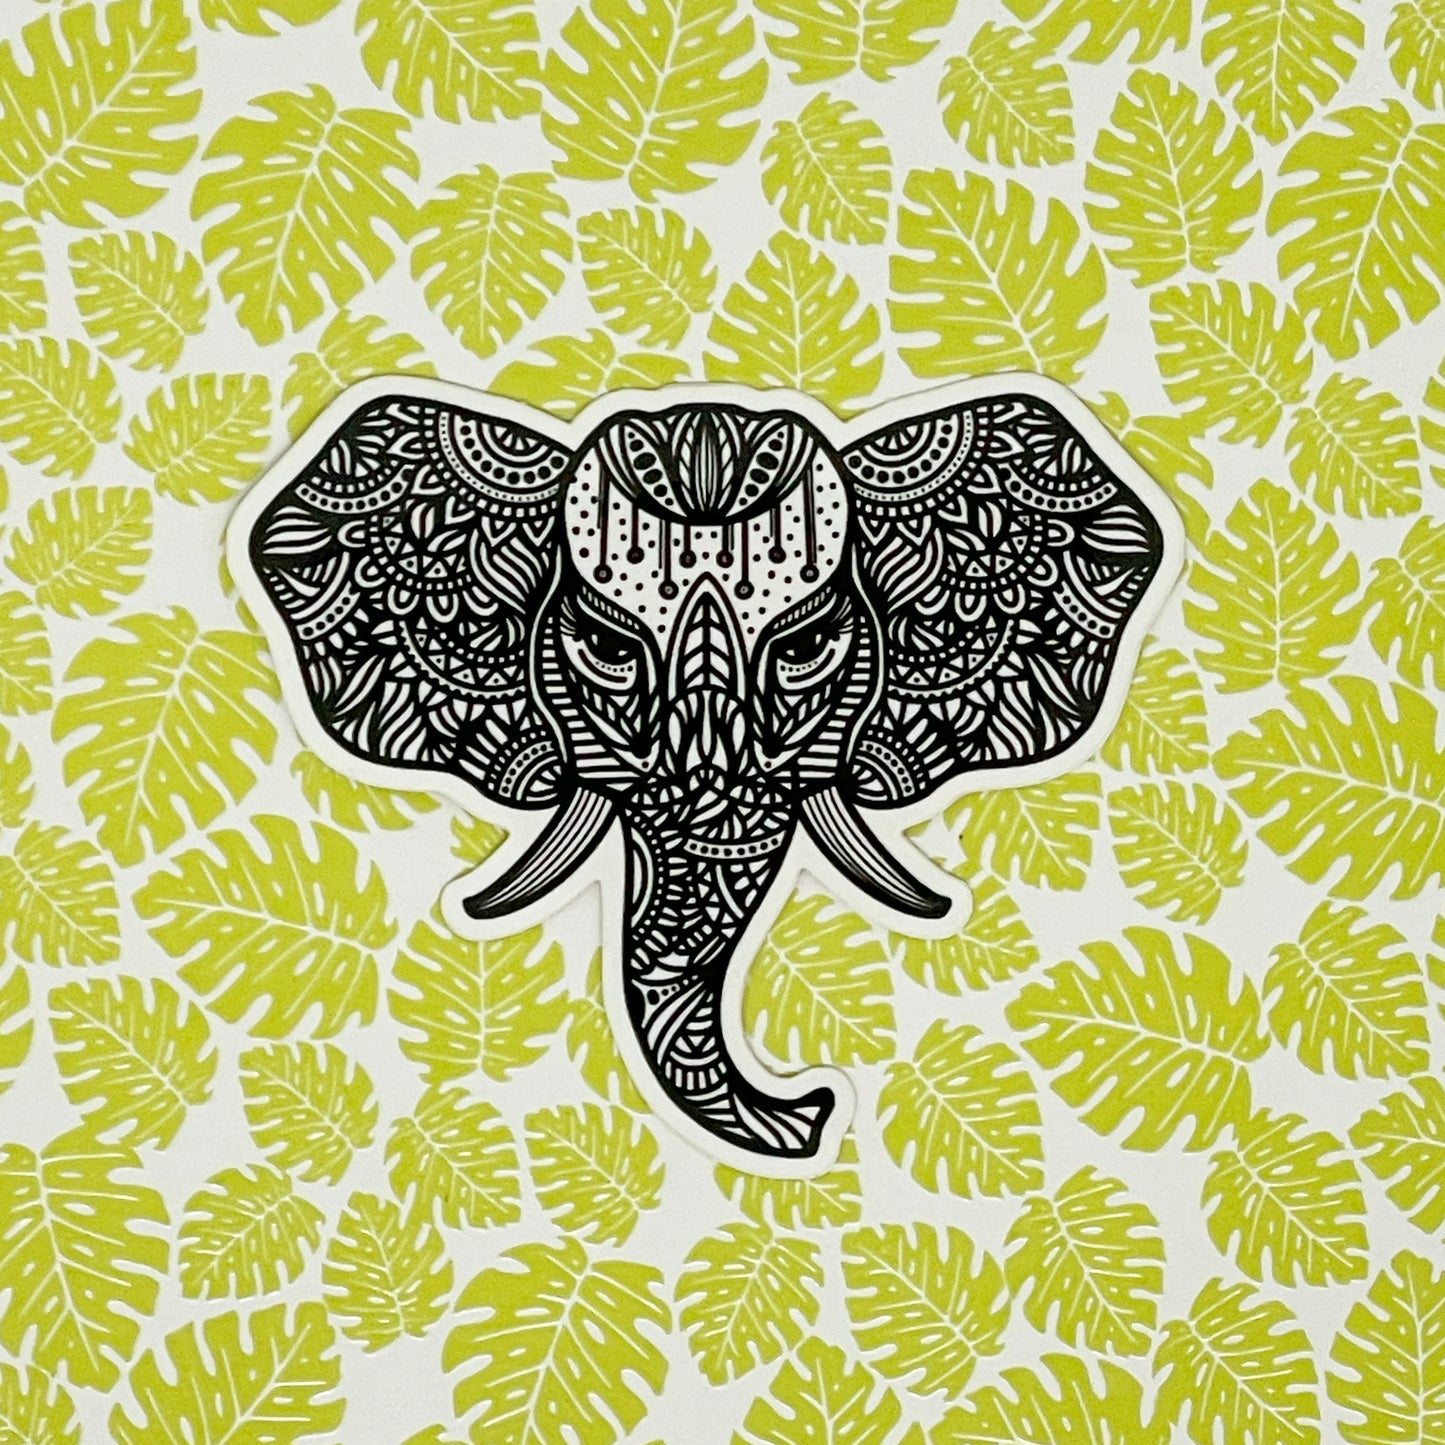 Elephant Sticker - Black and White